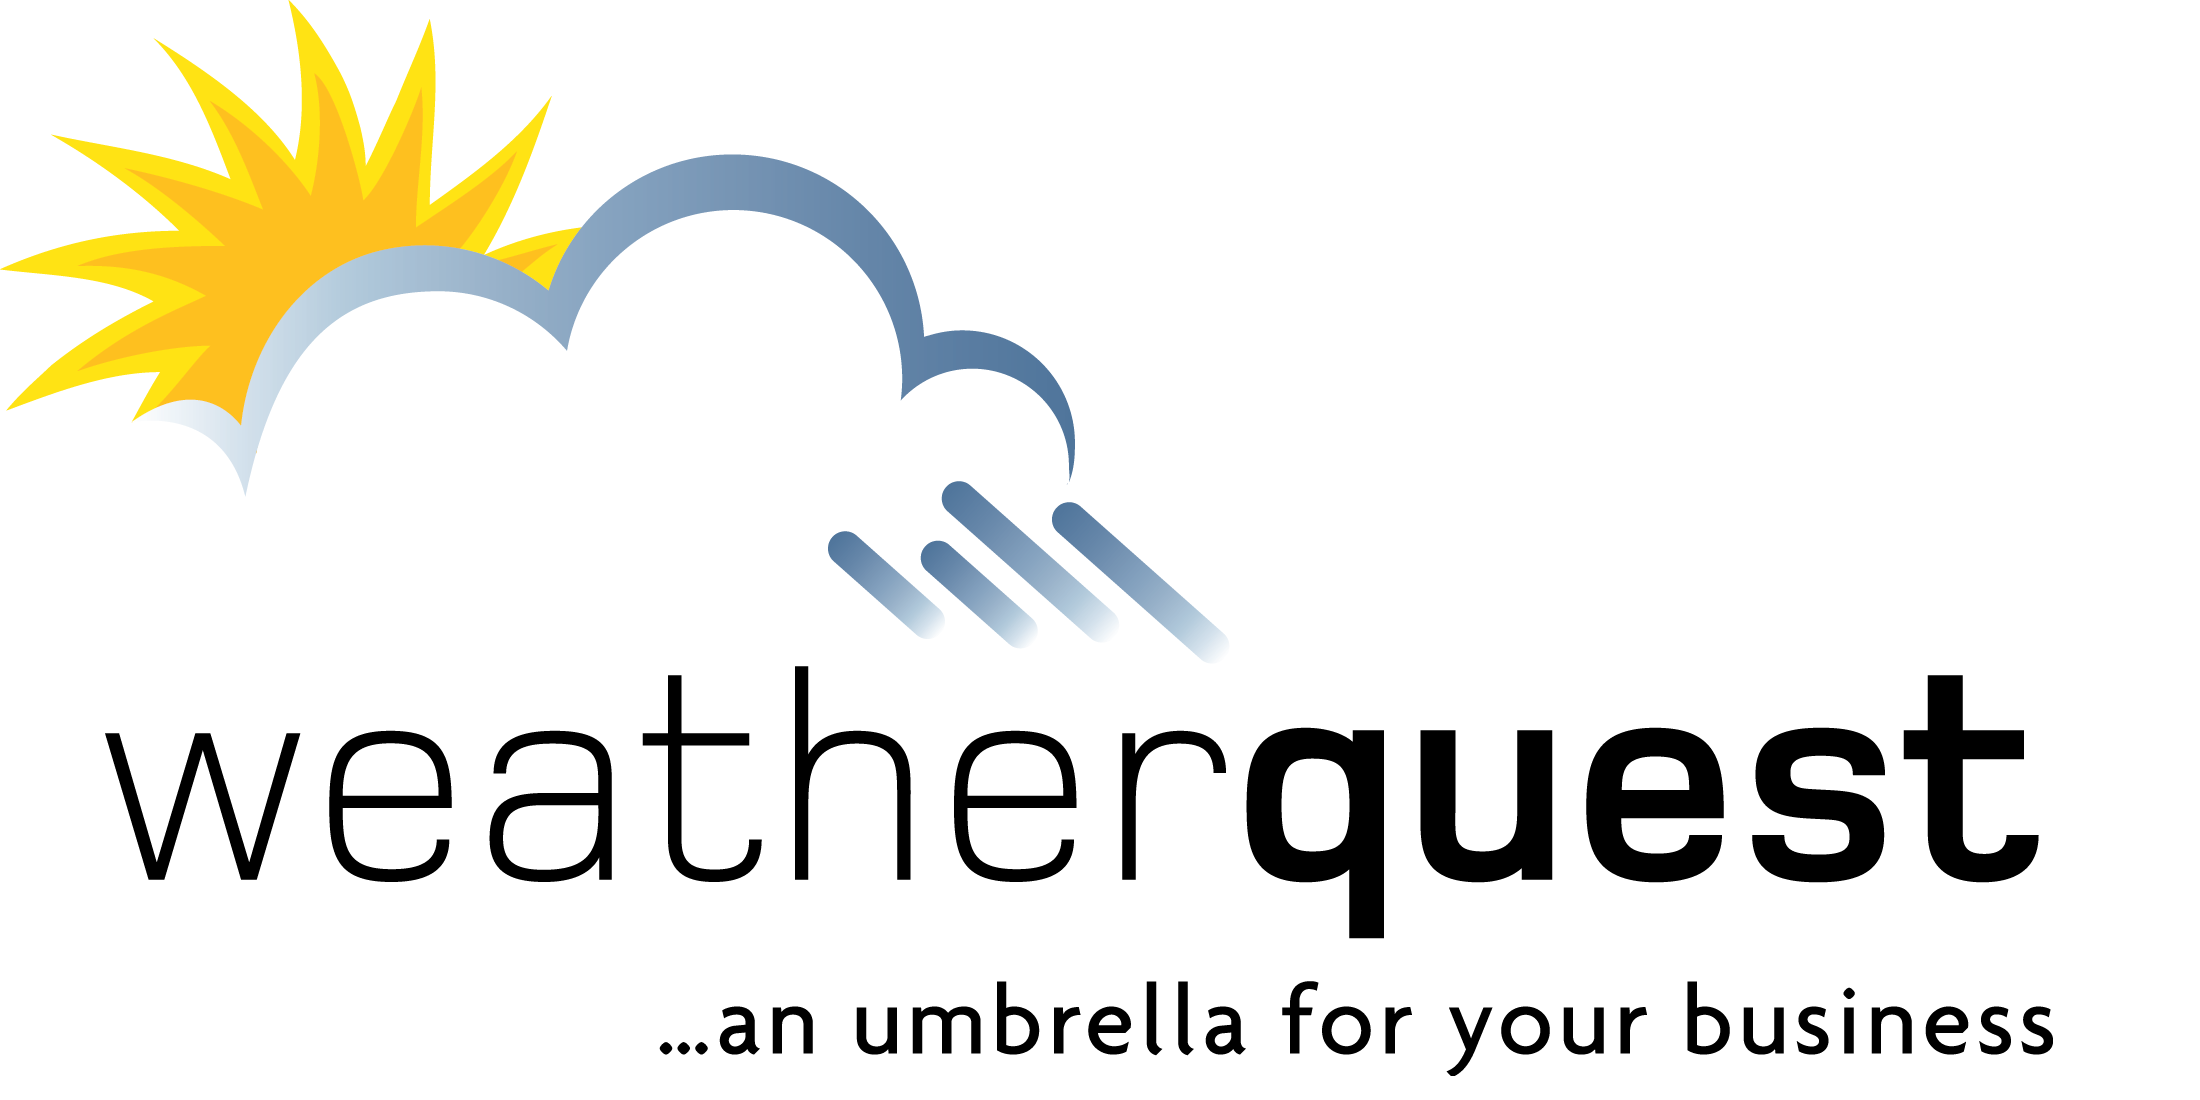 Weatherquest logo